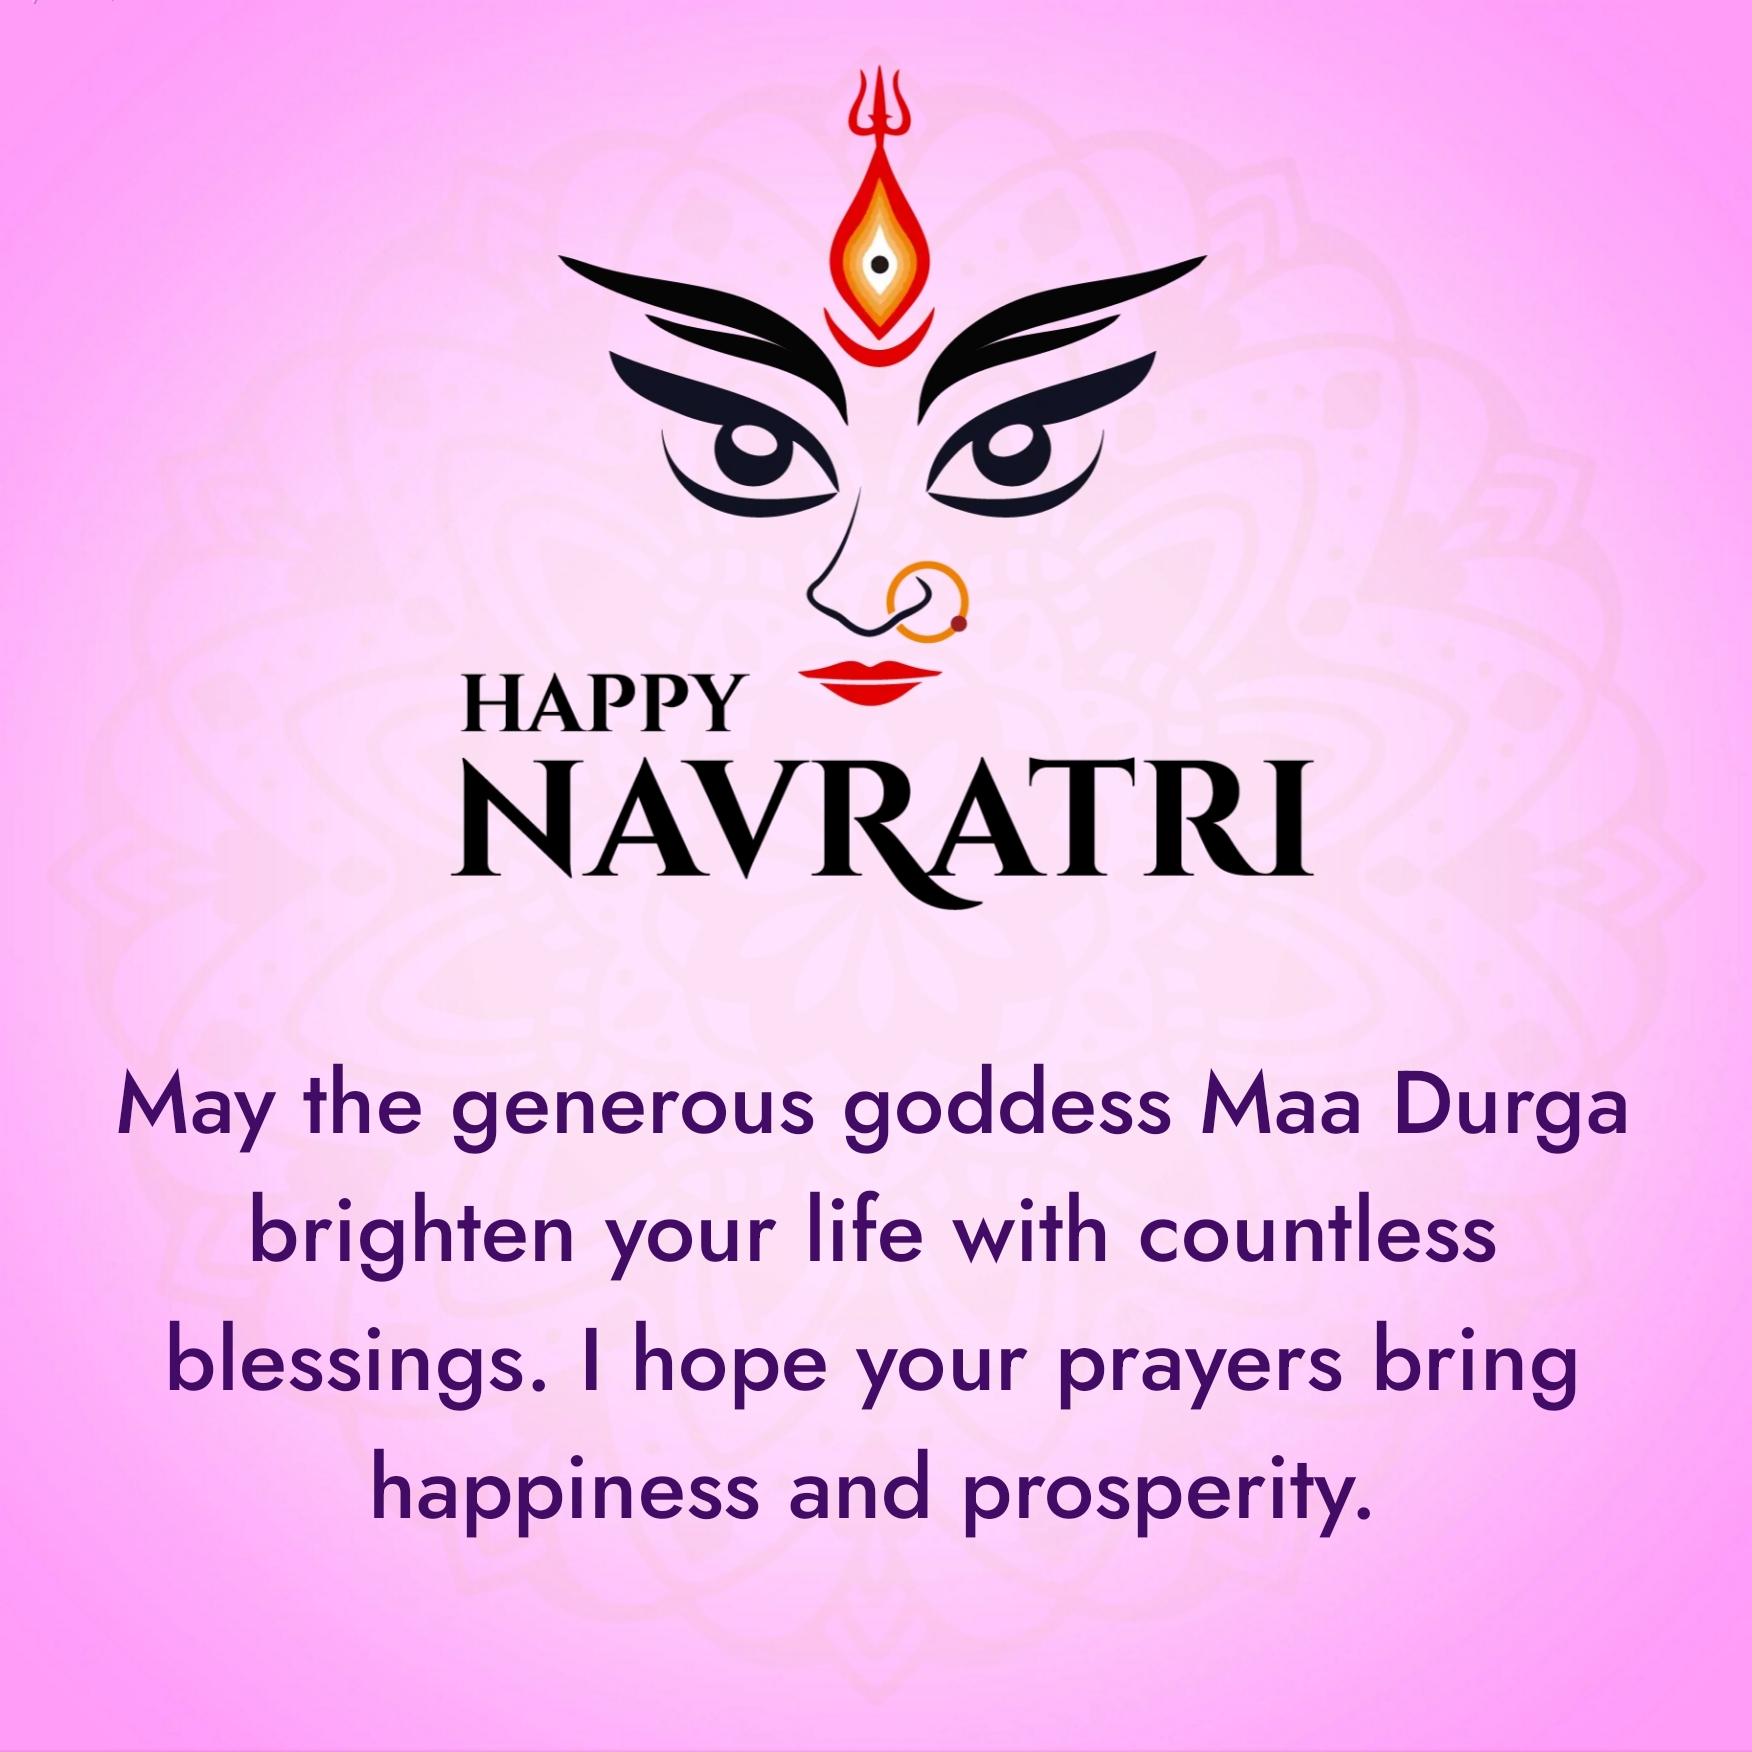 May the generous goddess Maa Durga brighten your life